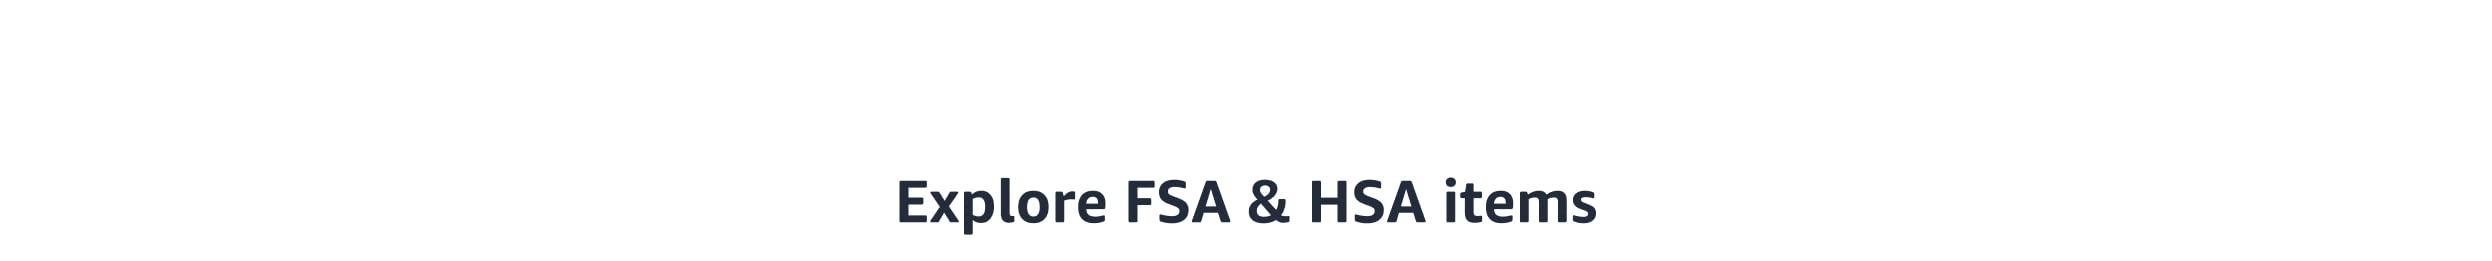 Explore FSA & HSA items